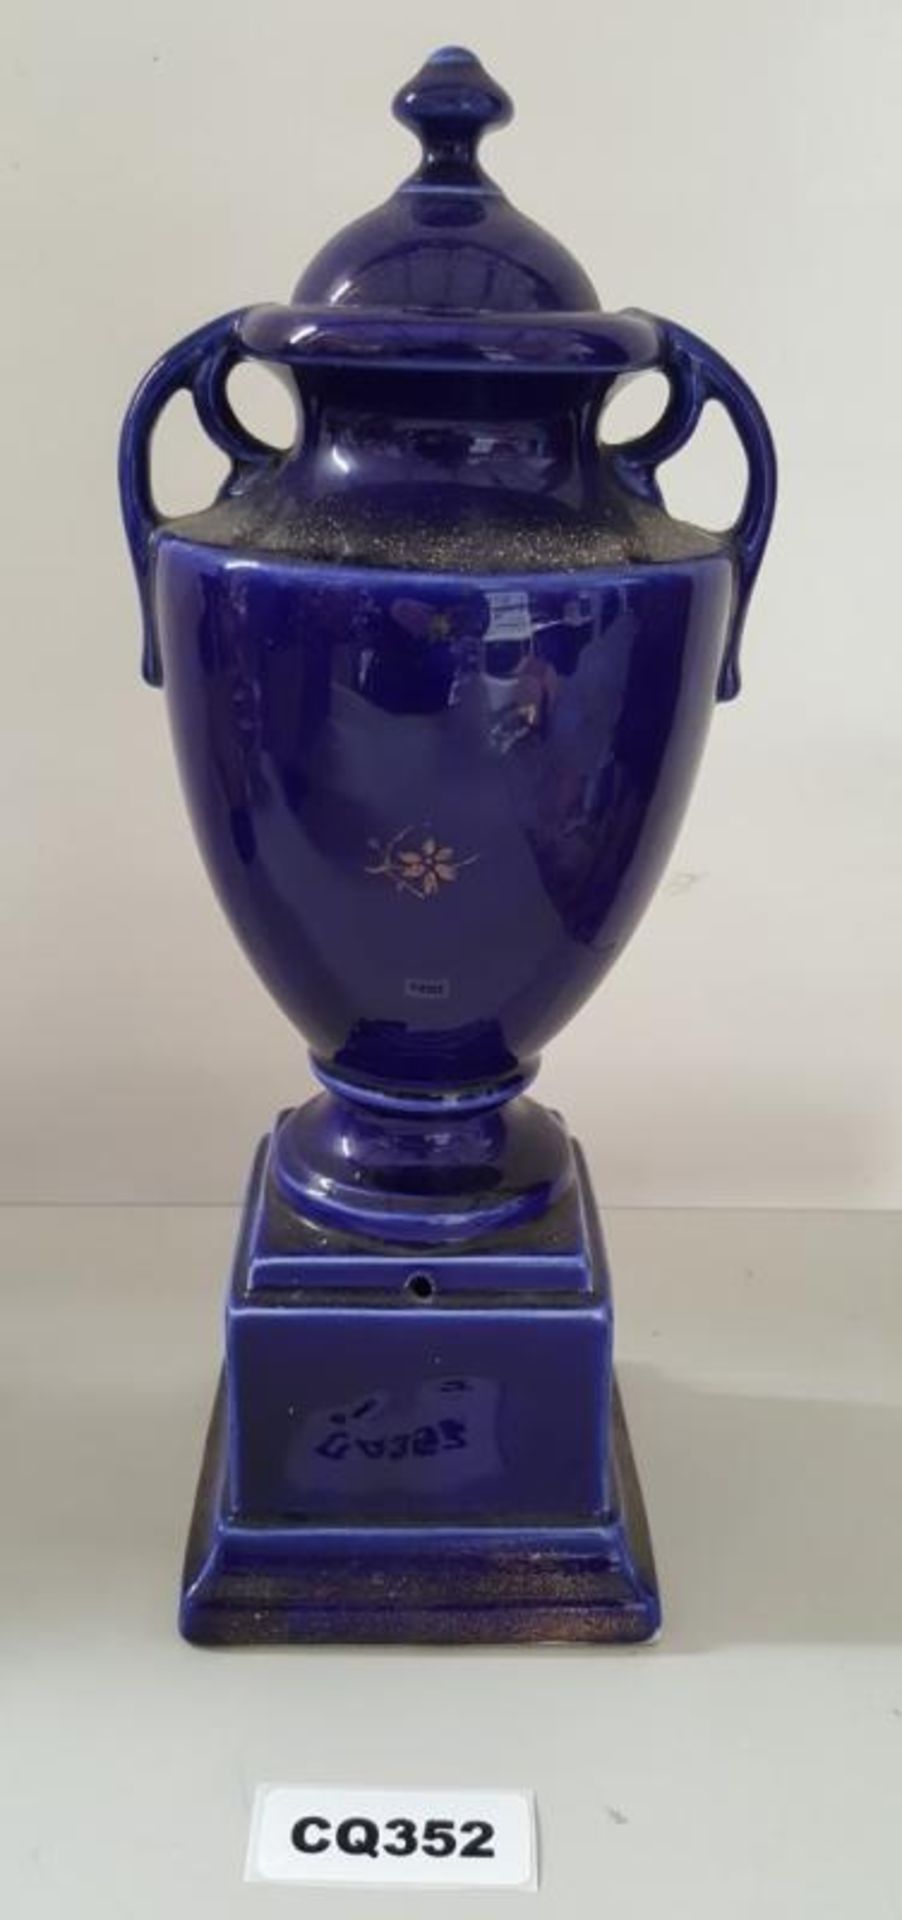 1 x Empire Stoke On Trent Blue Porcelain Trophy Shapped Ornament - Ref CQ352 E - Dimensions:H30/L11c - Image 2 of 4